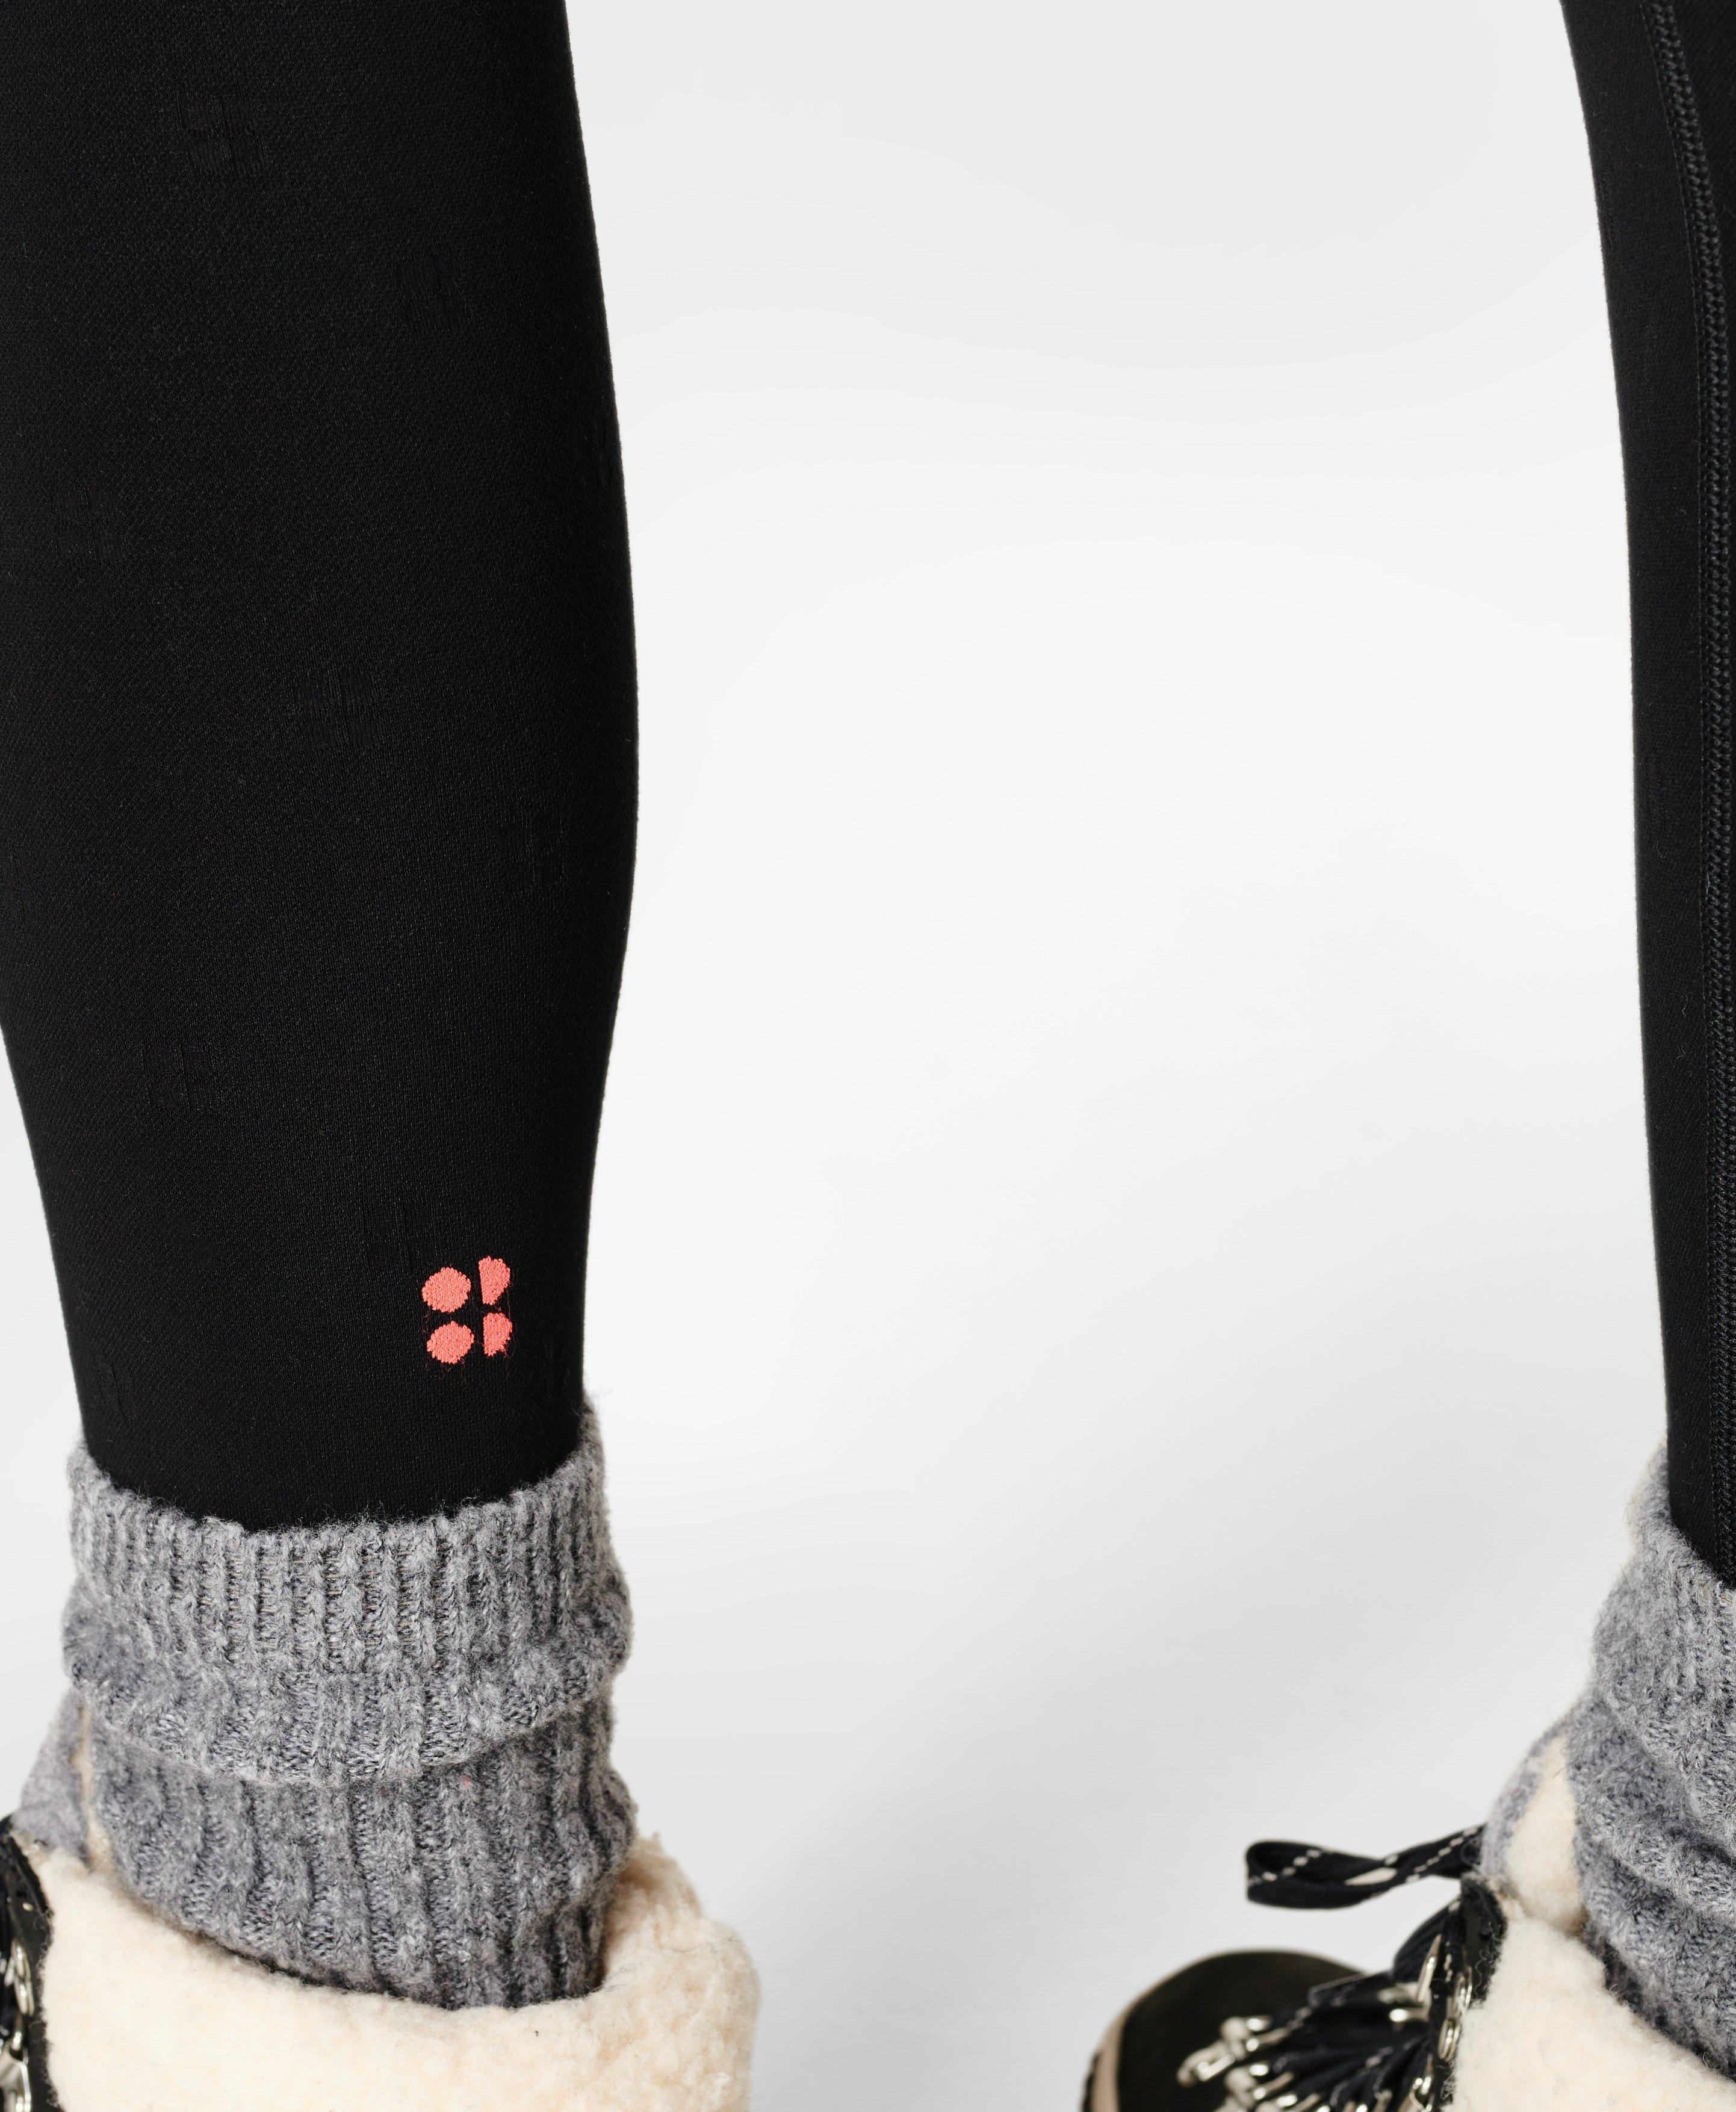 Modal Dot Jacquard Base Layer Leggings - Black, Women's Ski Clothes